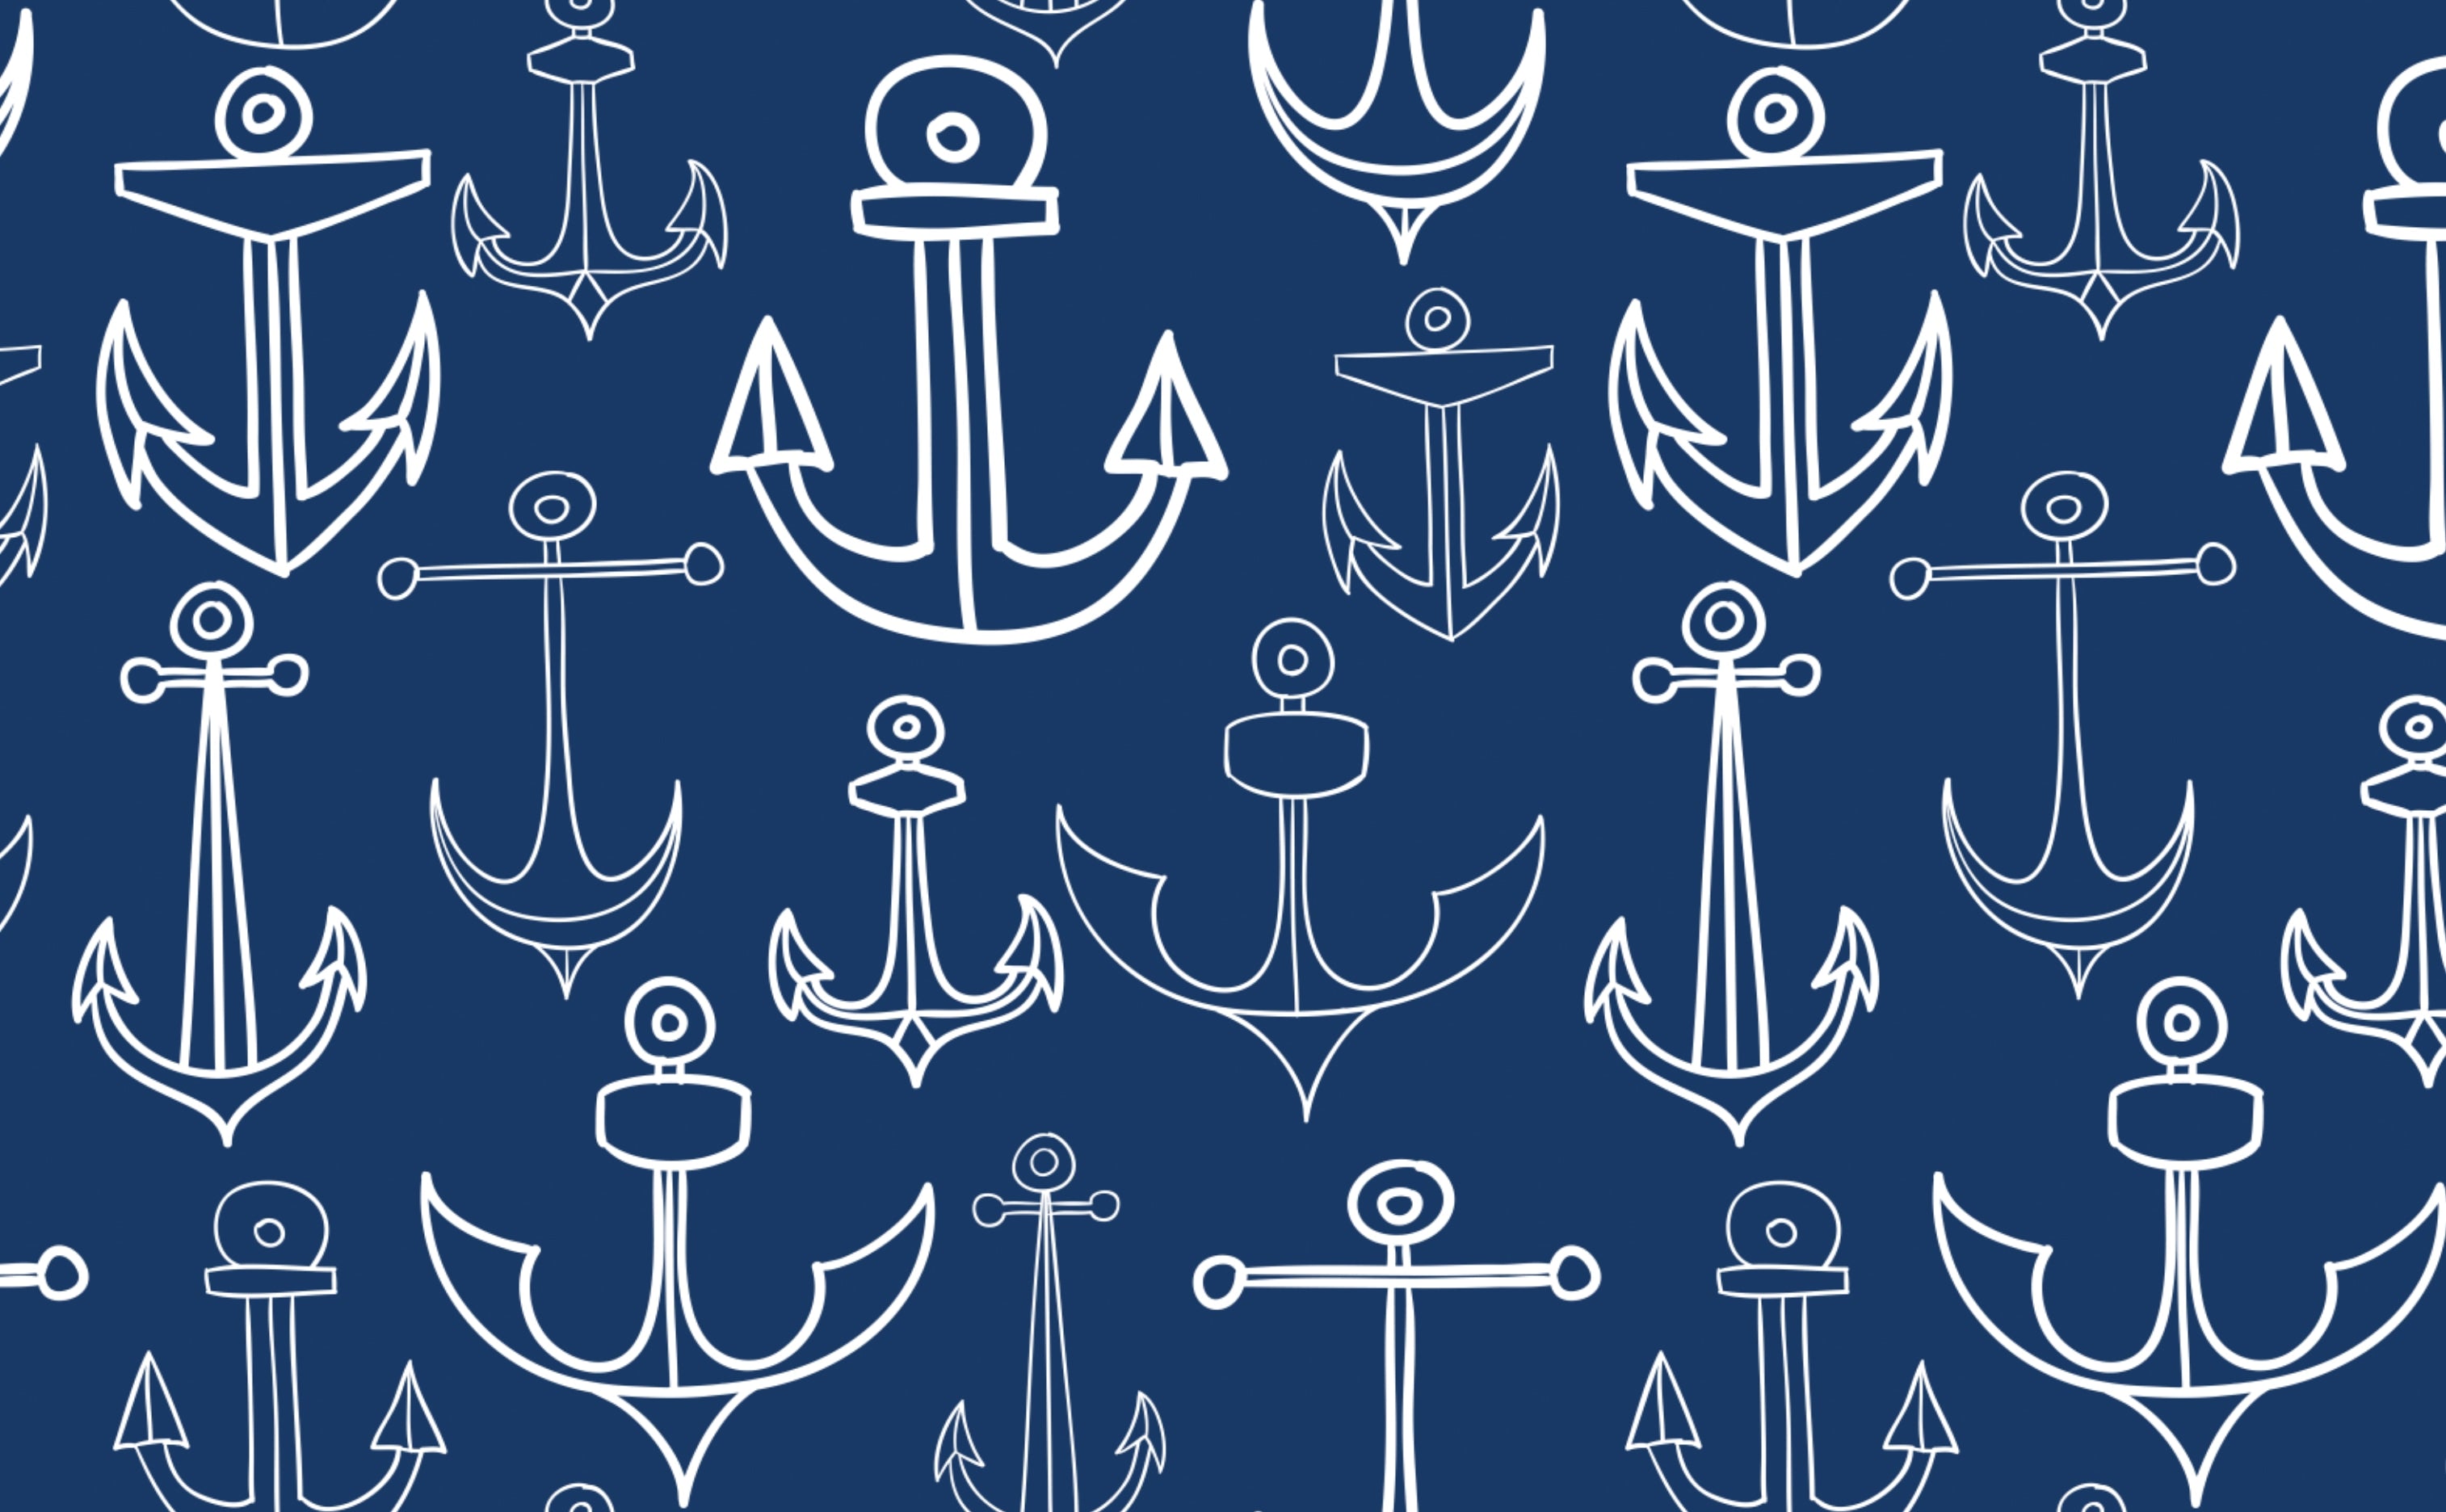 Anchors Away - Contemporary Nautical Anchor Art Wall Art, Canvas